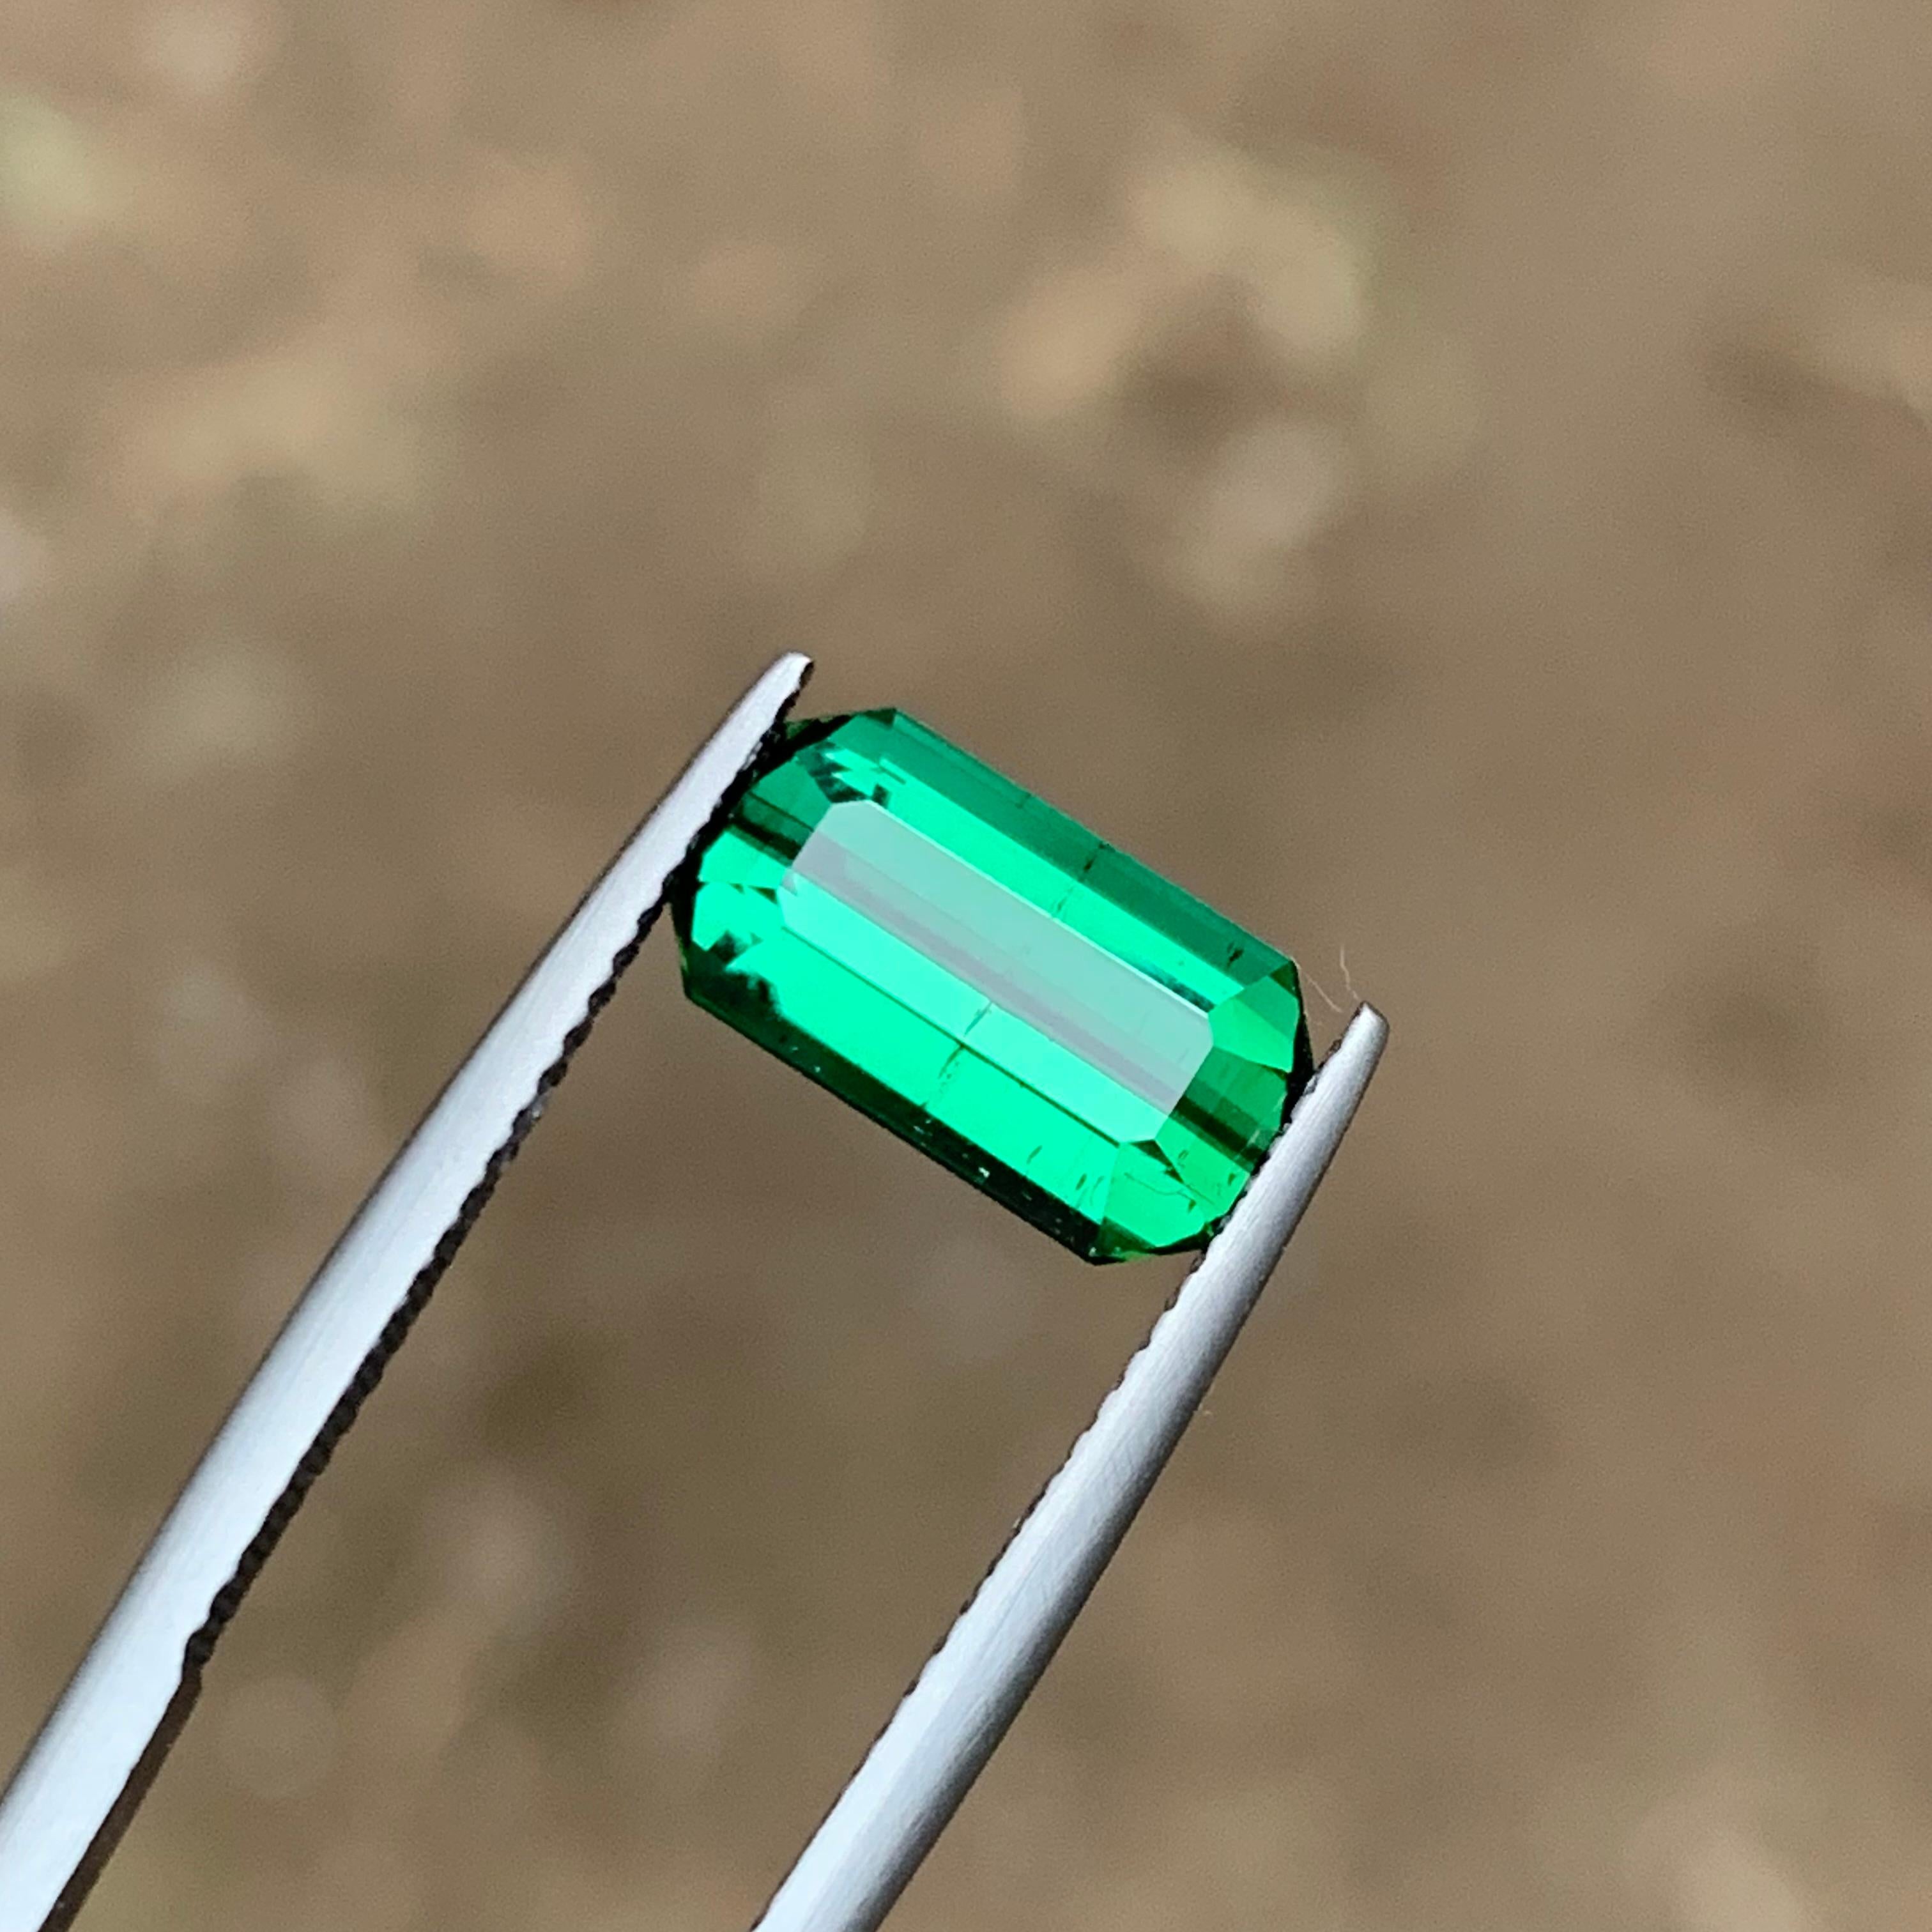 Rare Green Natural Tourmaline Gemstone, 3.85 Carat Emerald Cut for Ring/Pendant 1